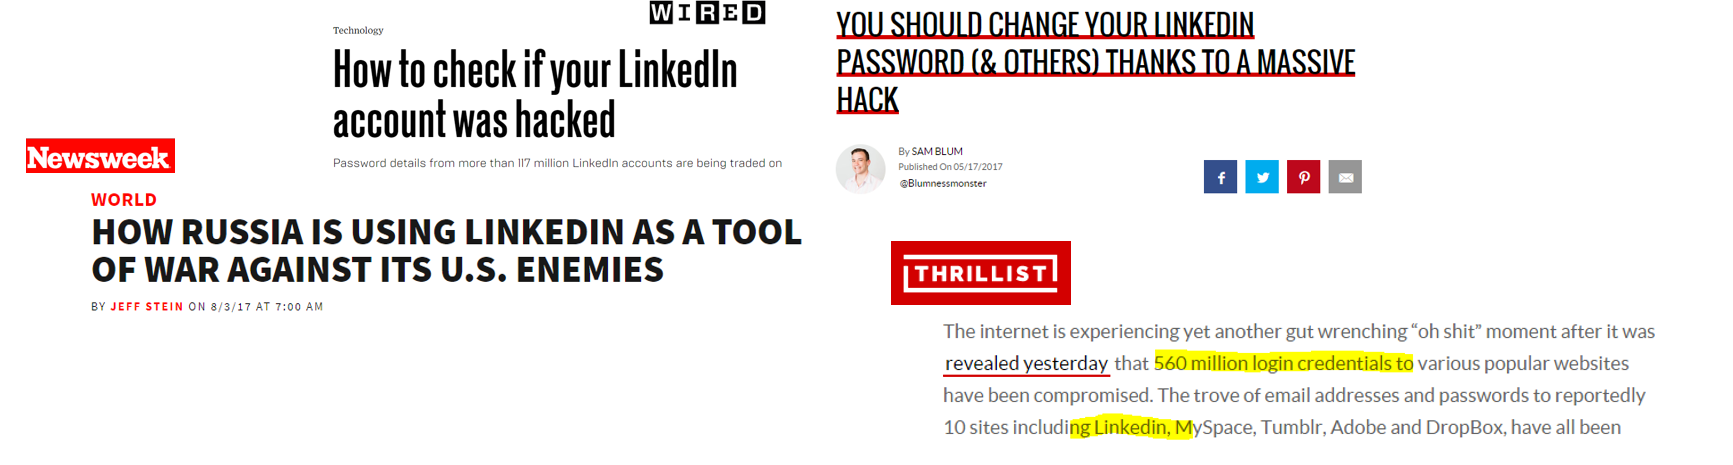 LI Headlines_Hacking